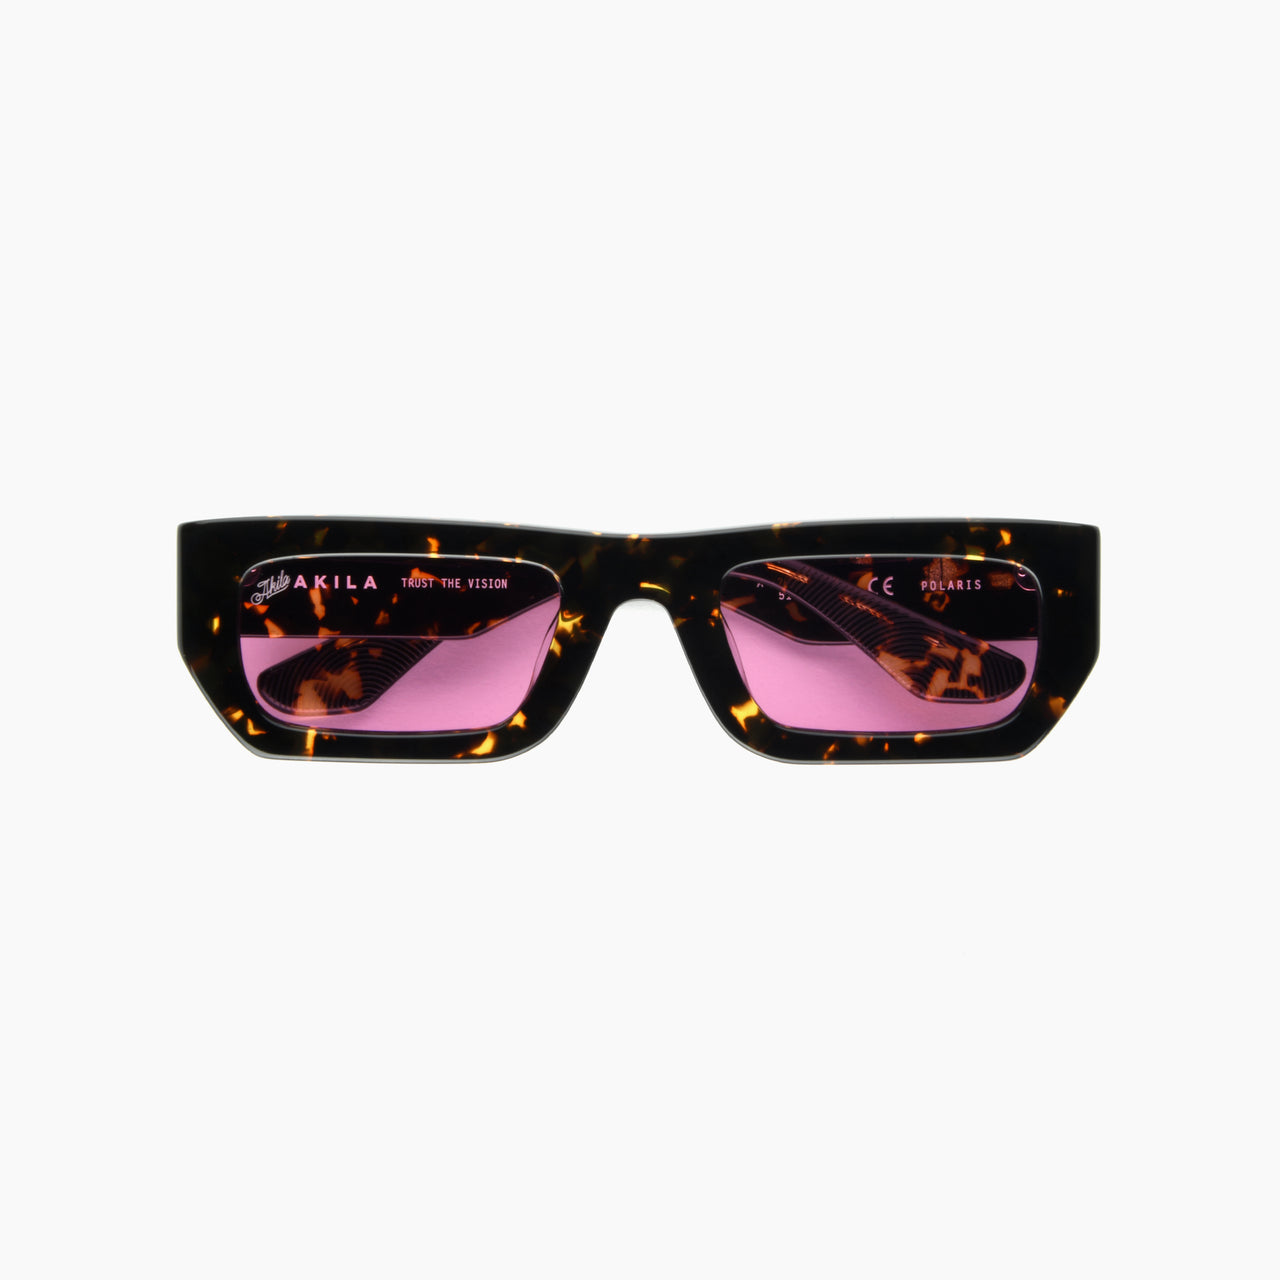 Polaris Sunglasses - Tokyo Tortoise/Magenta